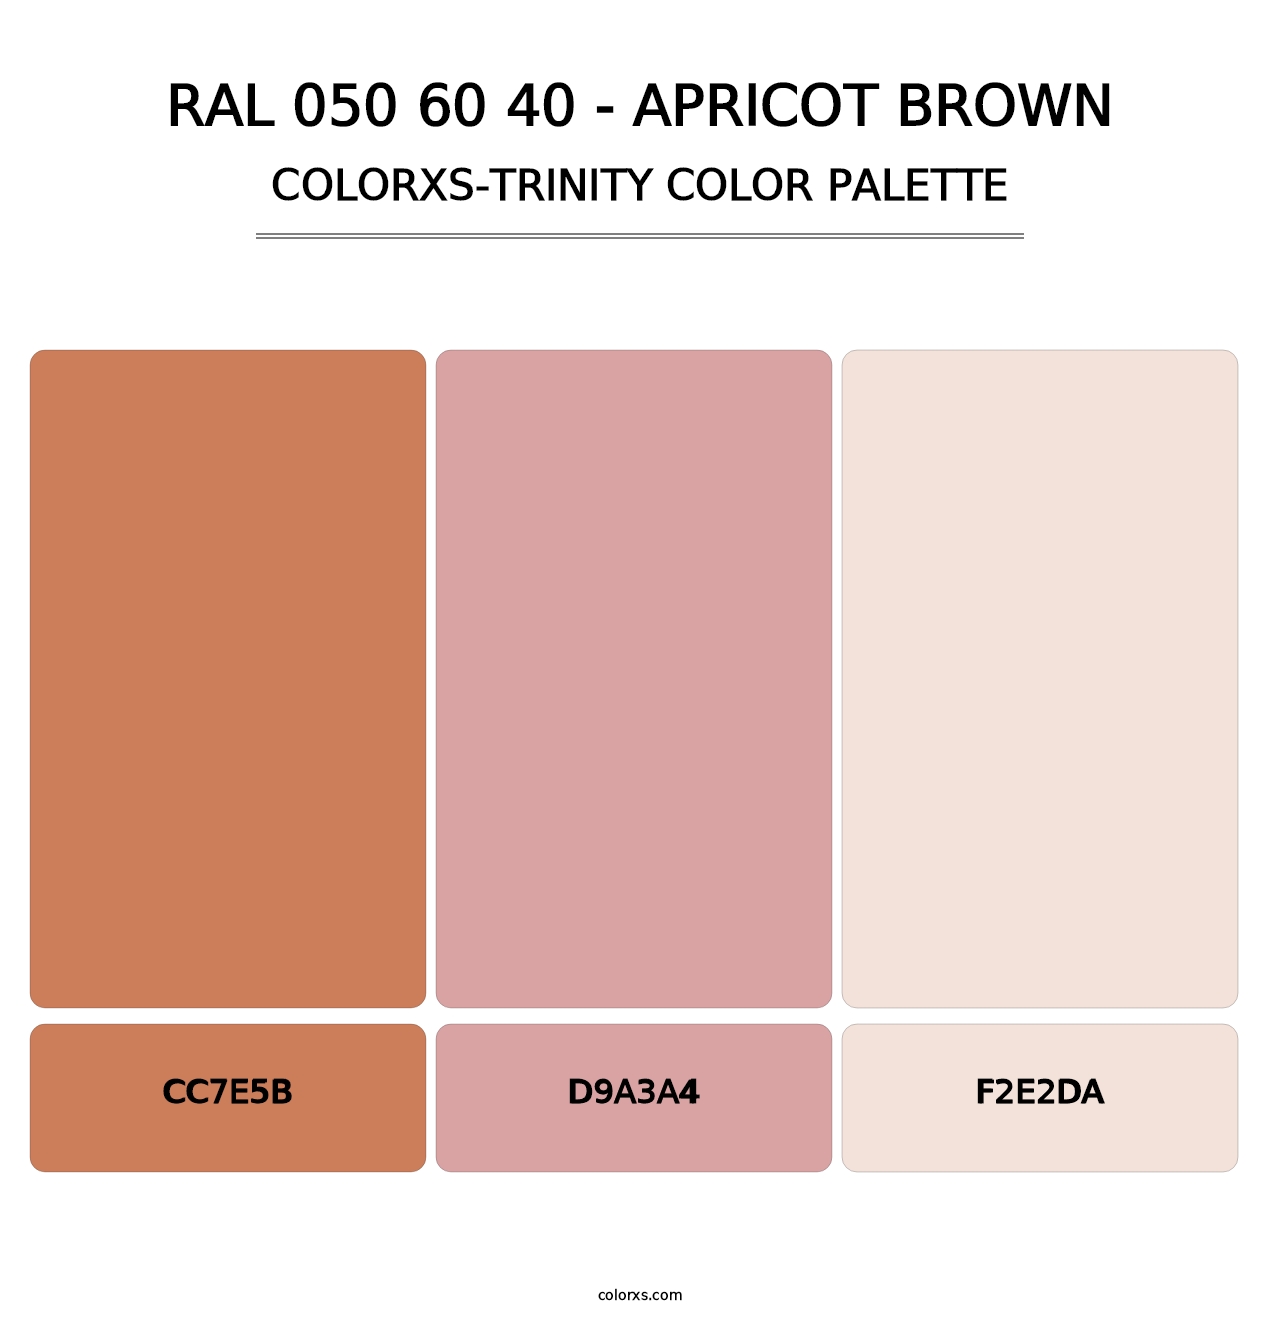 RAL 050 60 40 - Apricot Brown - Colorxs Trinity Palette